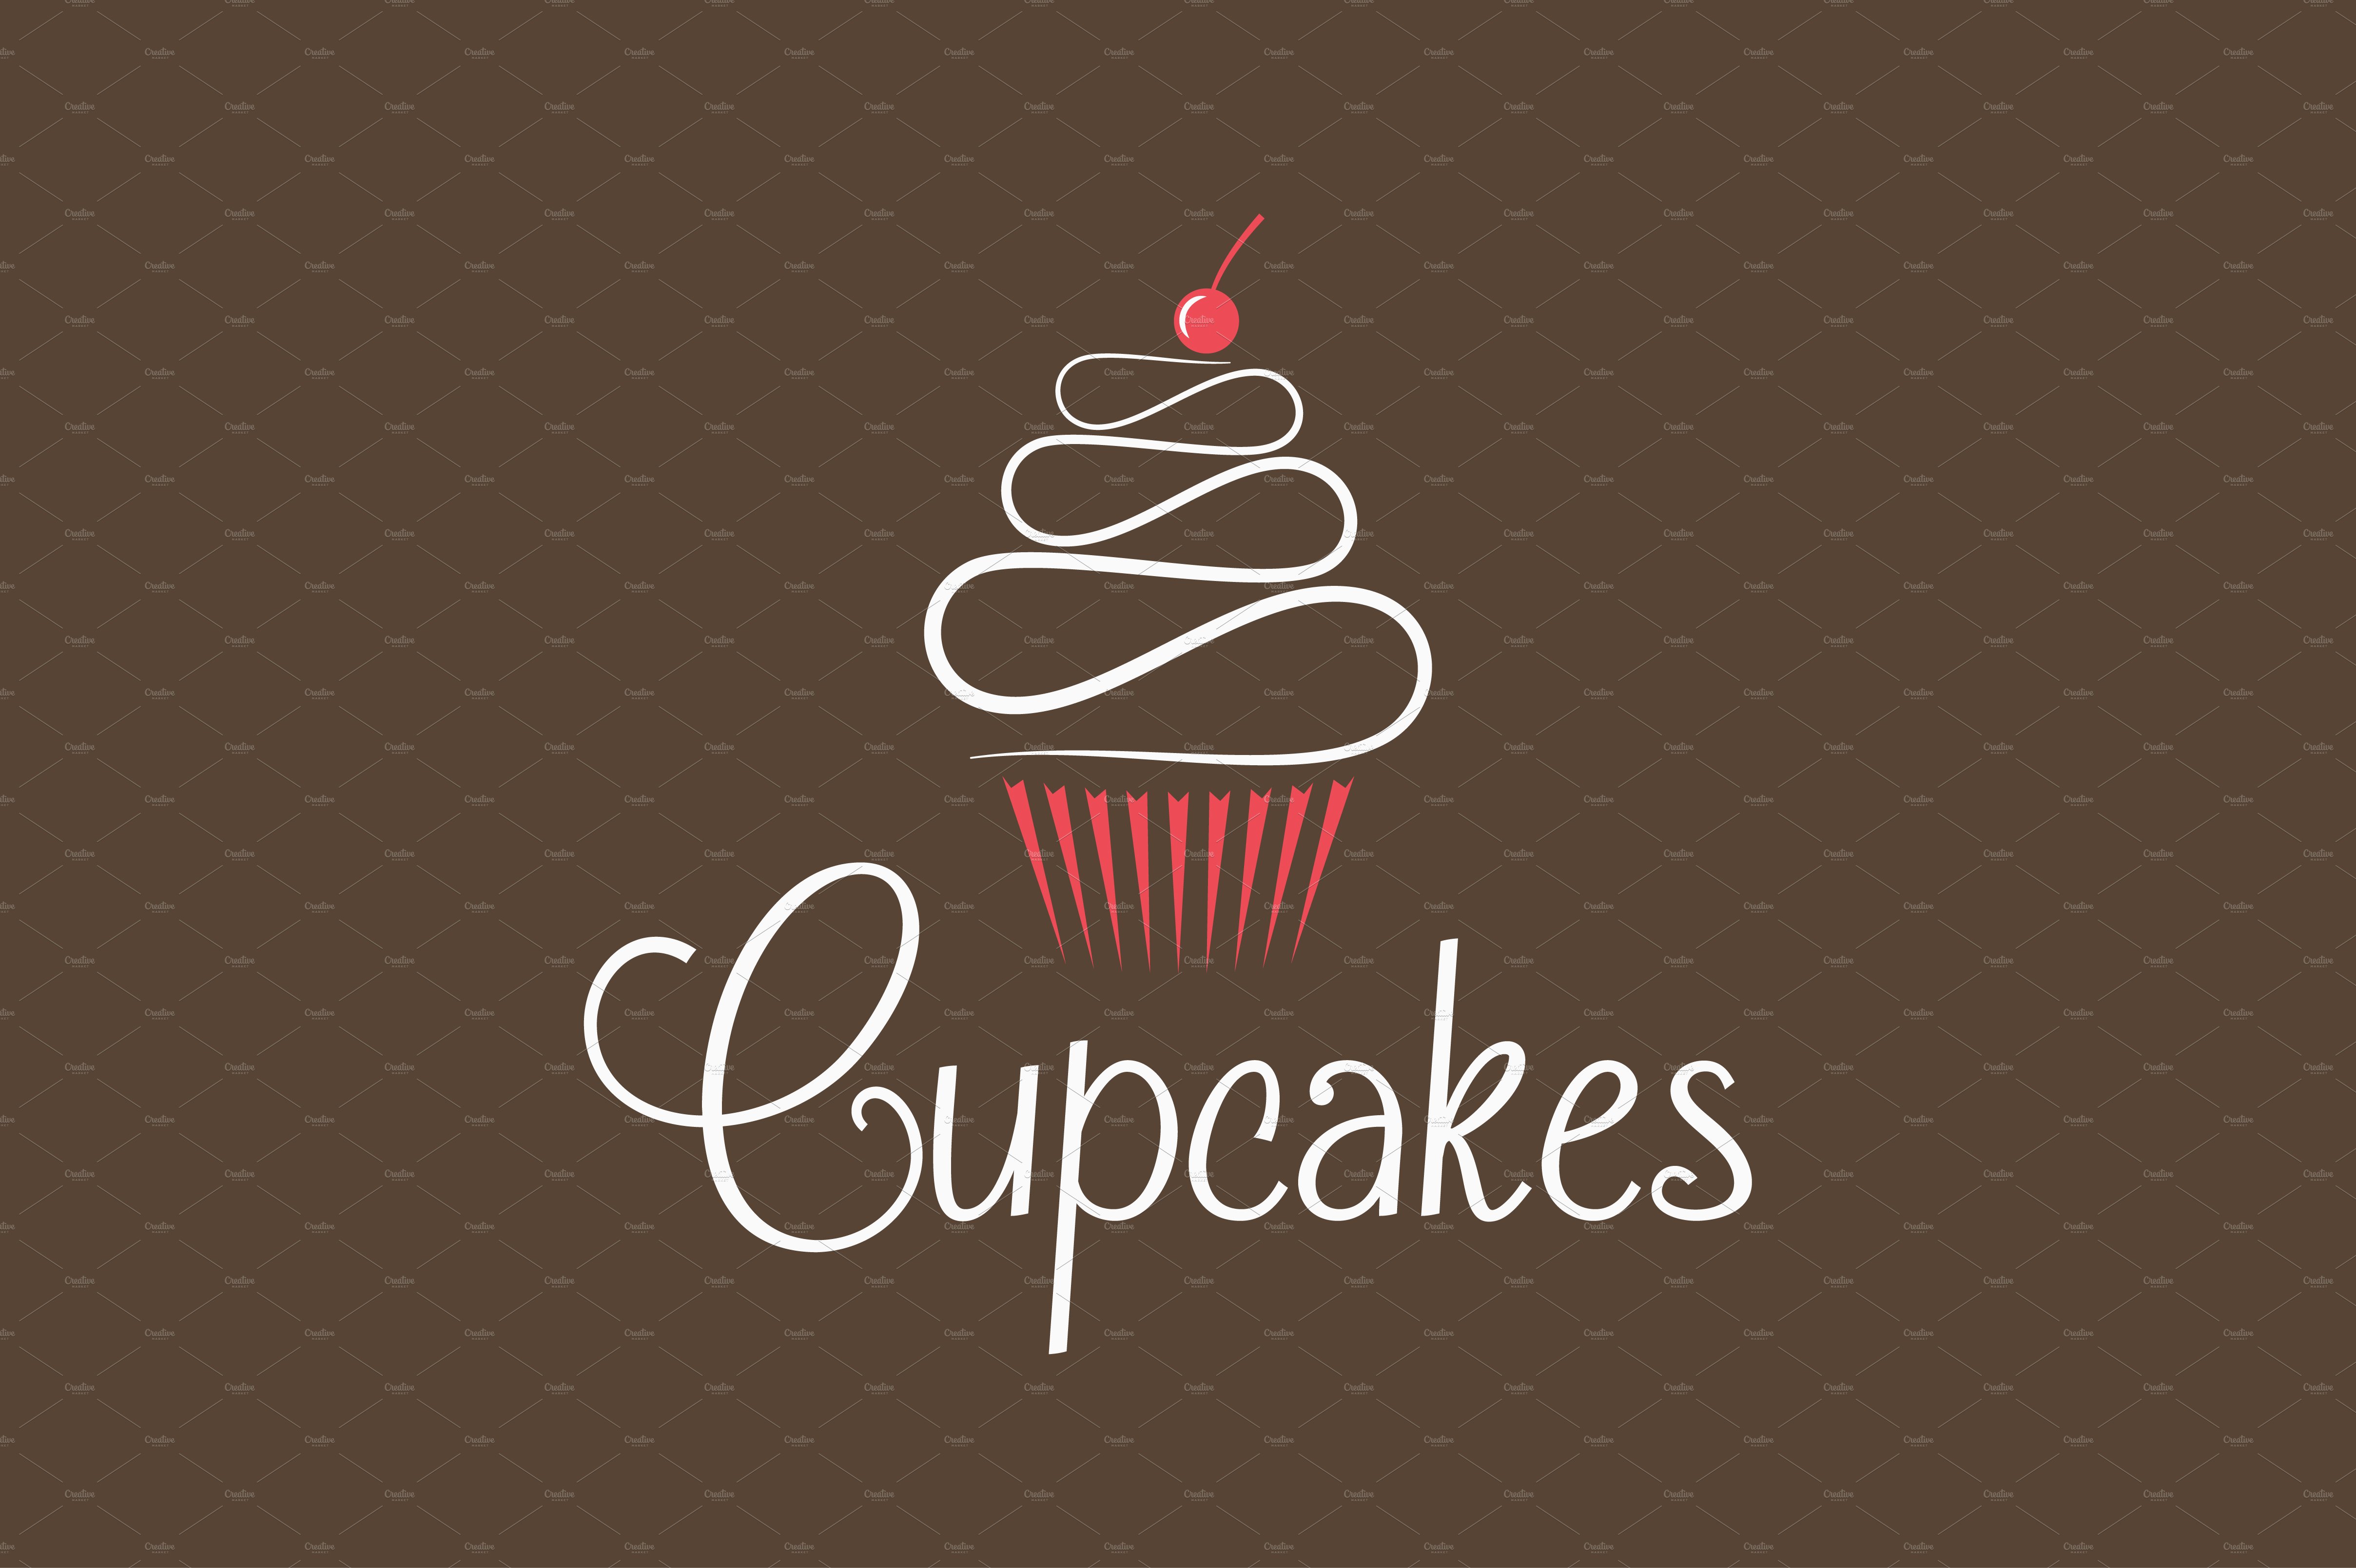 Cupcake logo design background cover image.